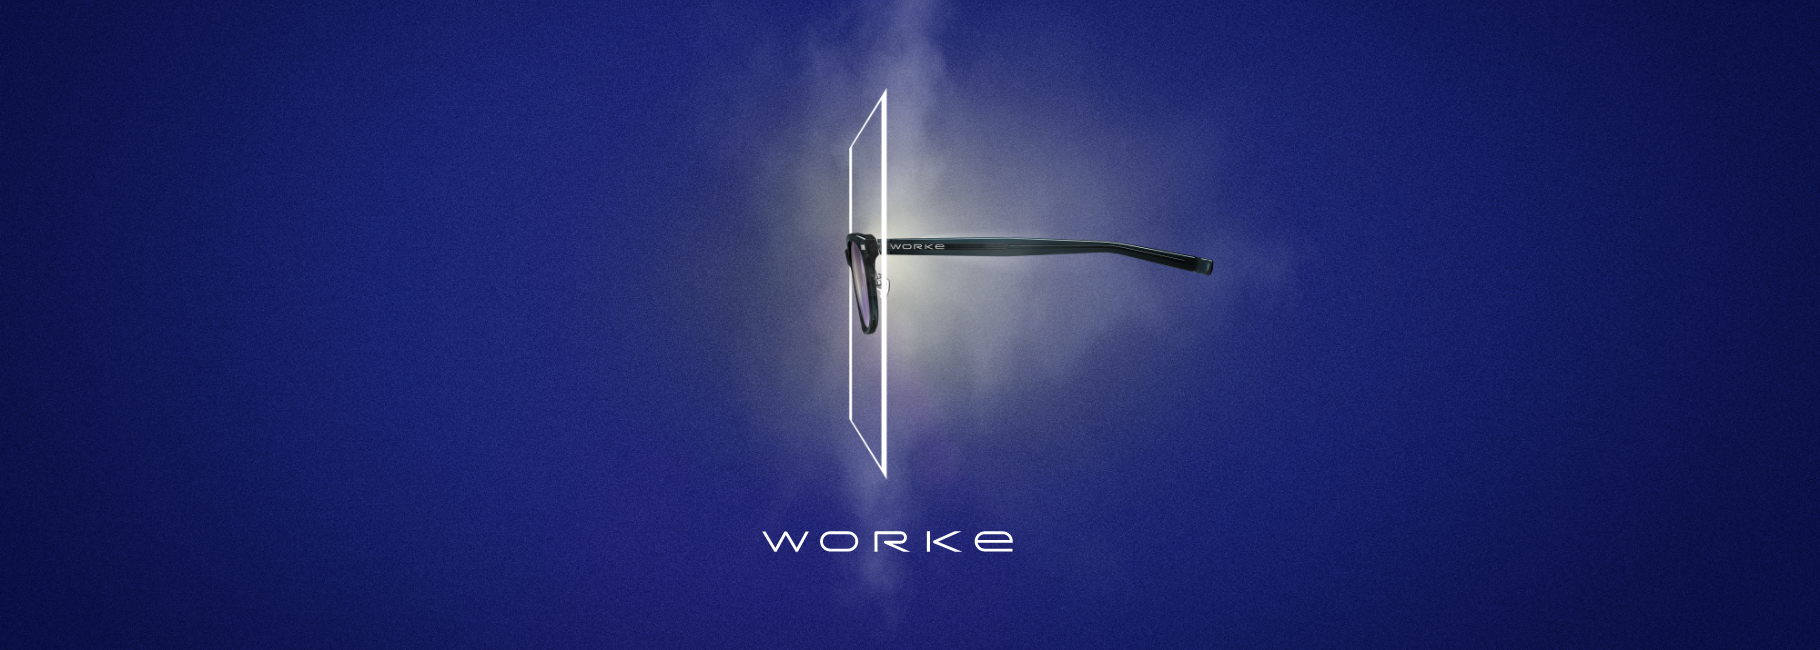 WORKe | フォーナインズ 公式ウェブサイト